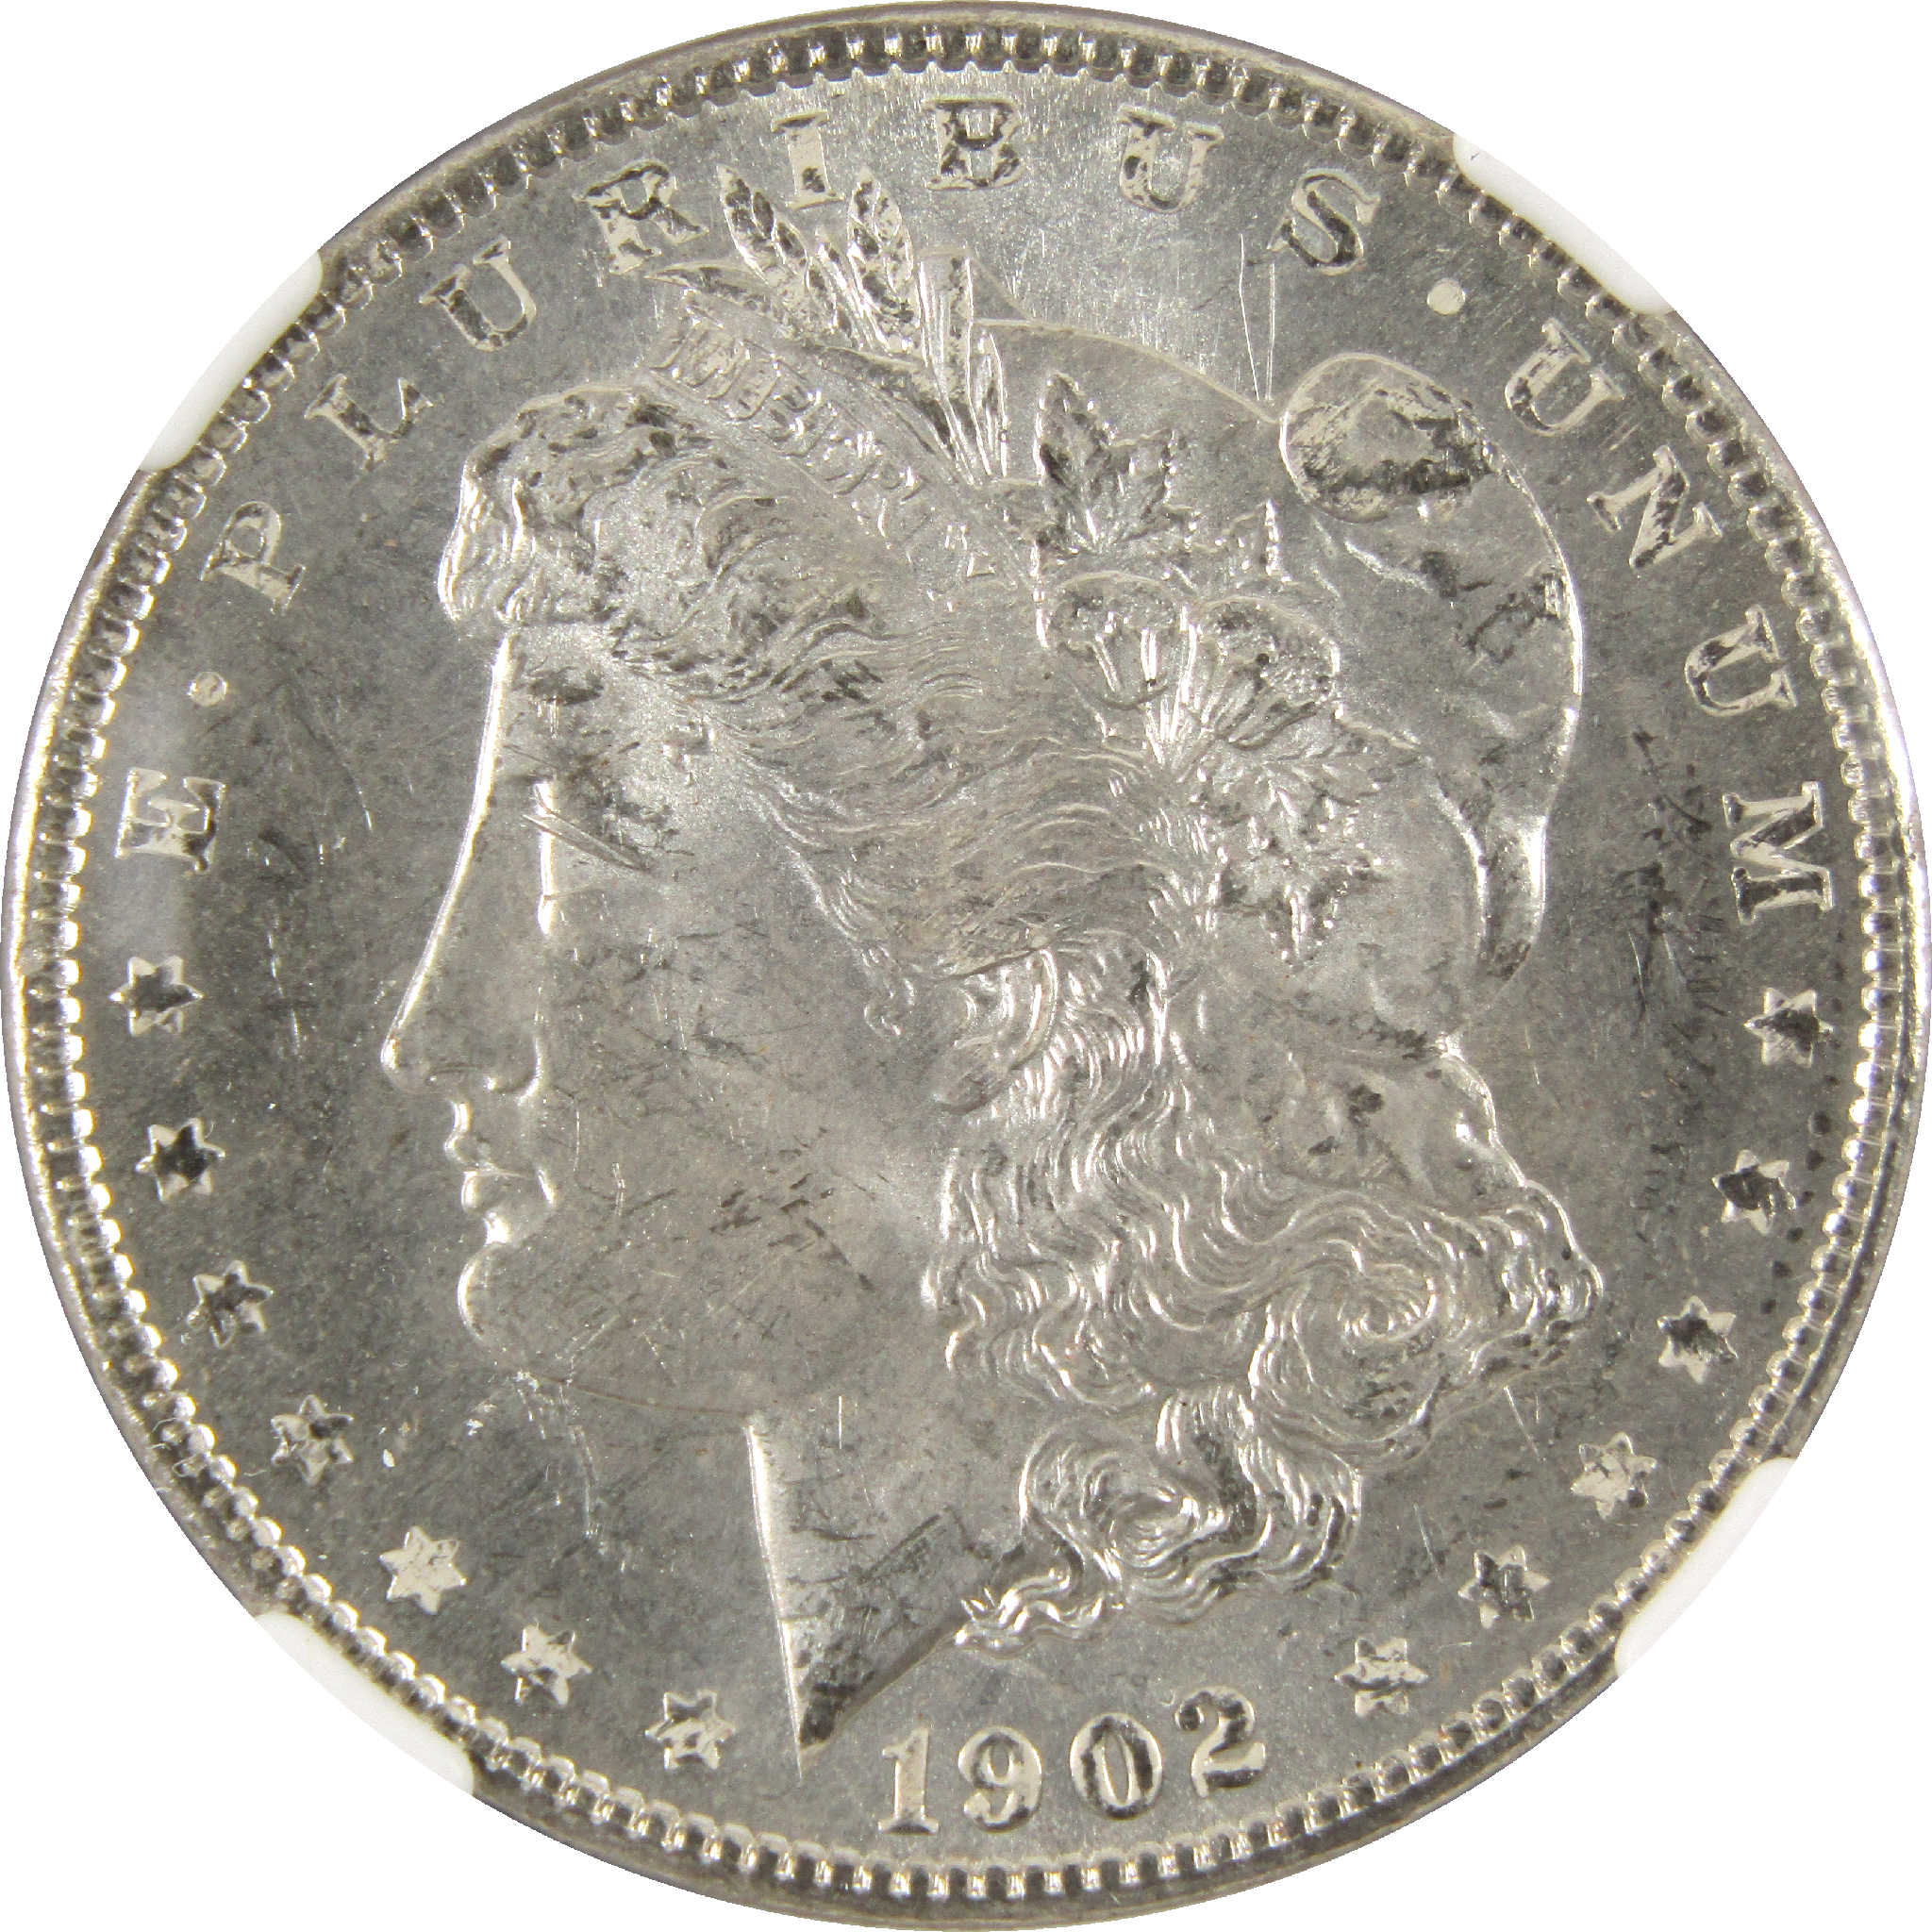 1902 O Morgan Dollar MS 64 NGC Silver $1 Uncirculated Coin SKU:CPC6284 - Morgan coin - Morgan silver dollar - Morgan silver dollar for sale - Profile Coins &amp; Collectibles